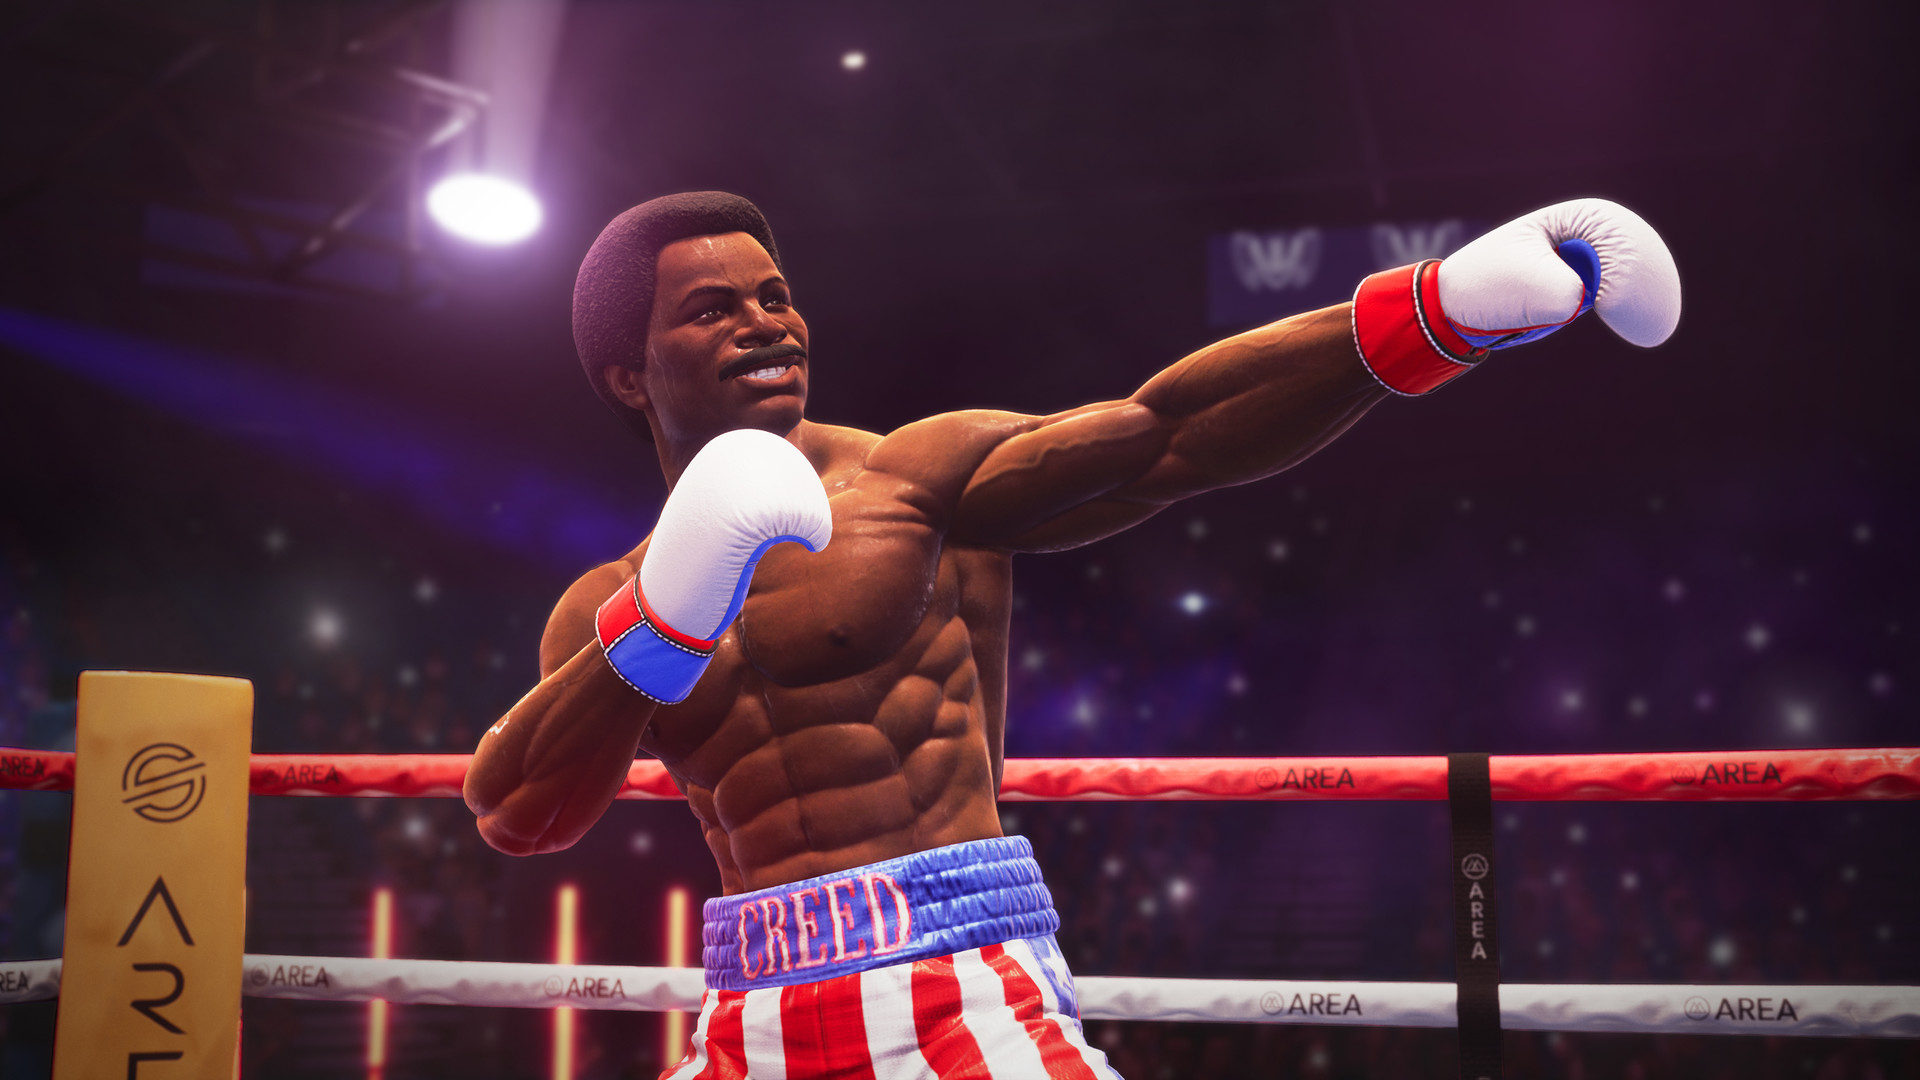 Big Rumble Boxing: Creed Champions Free Download